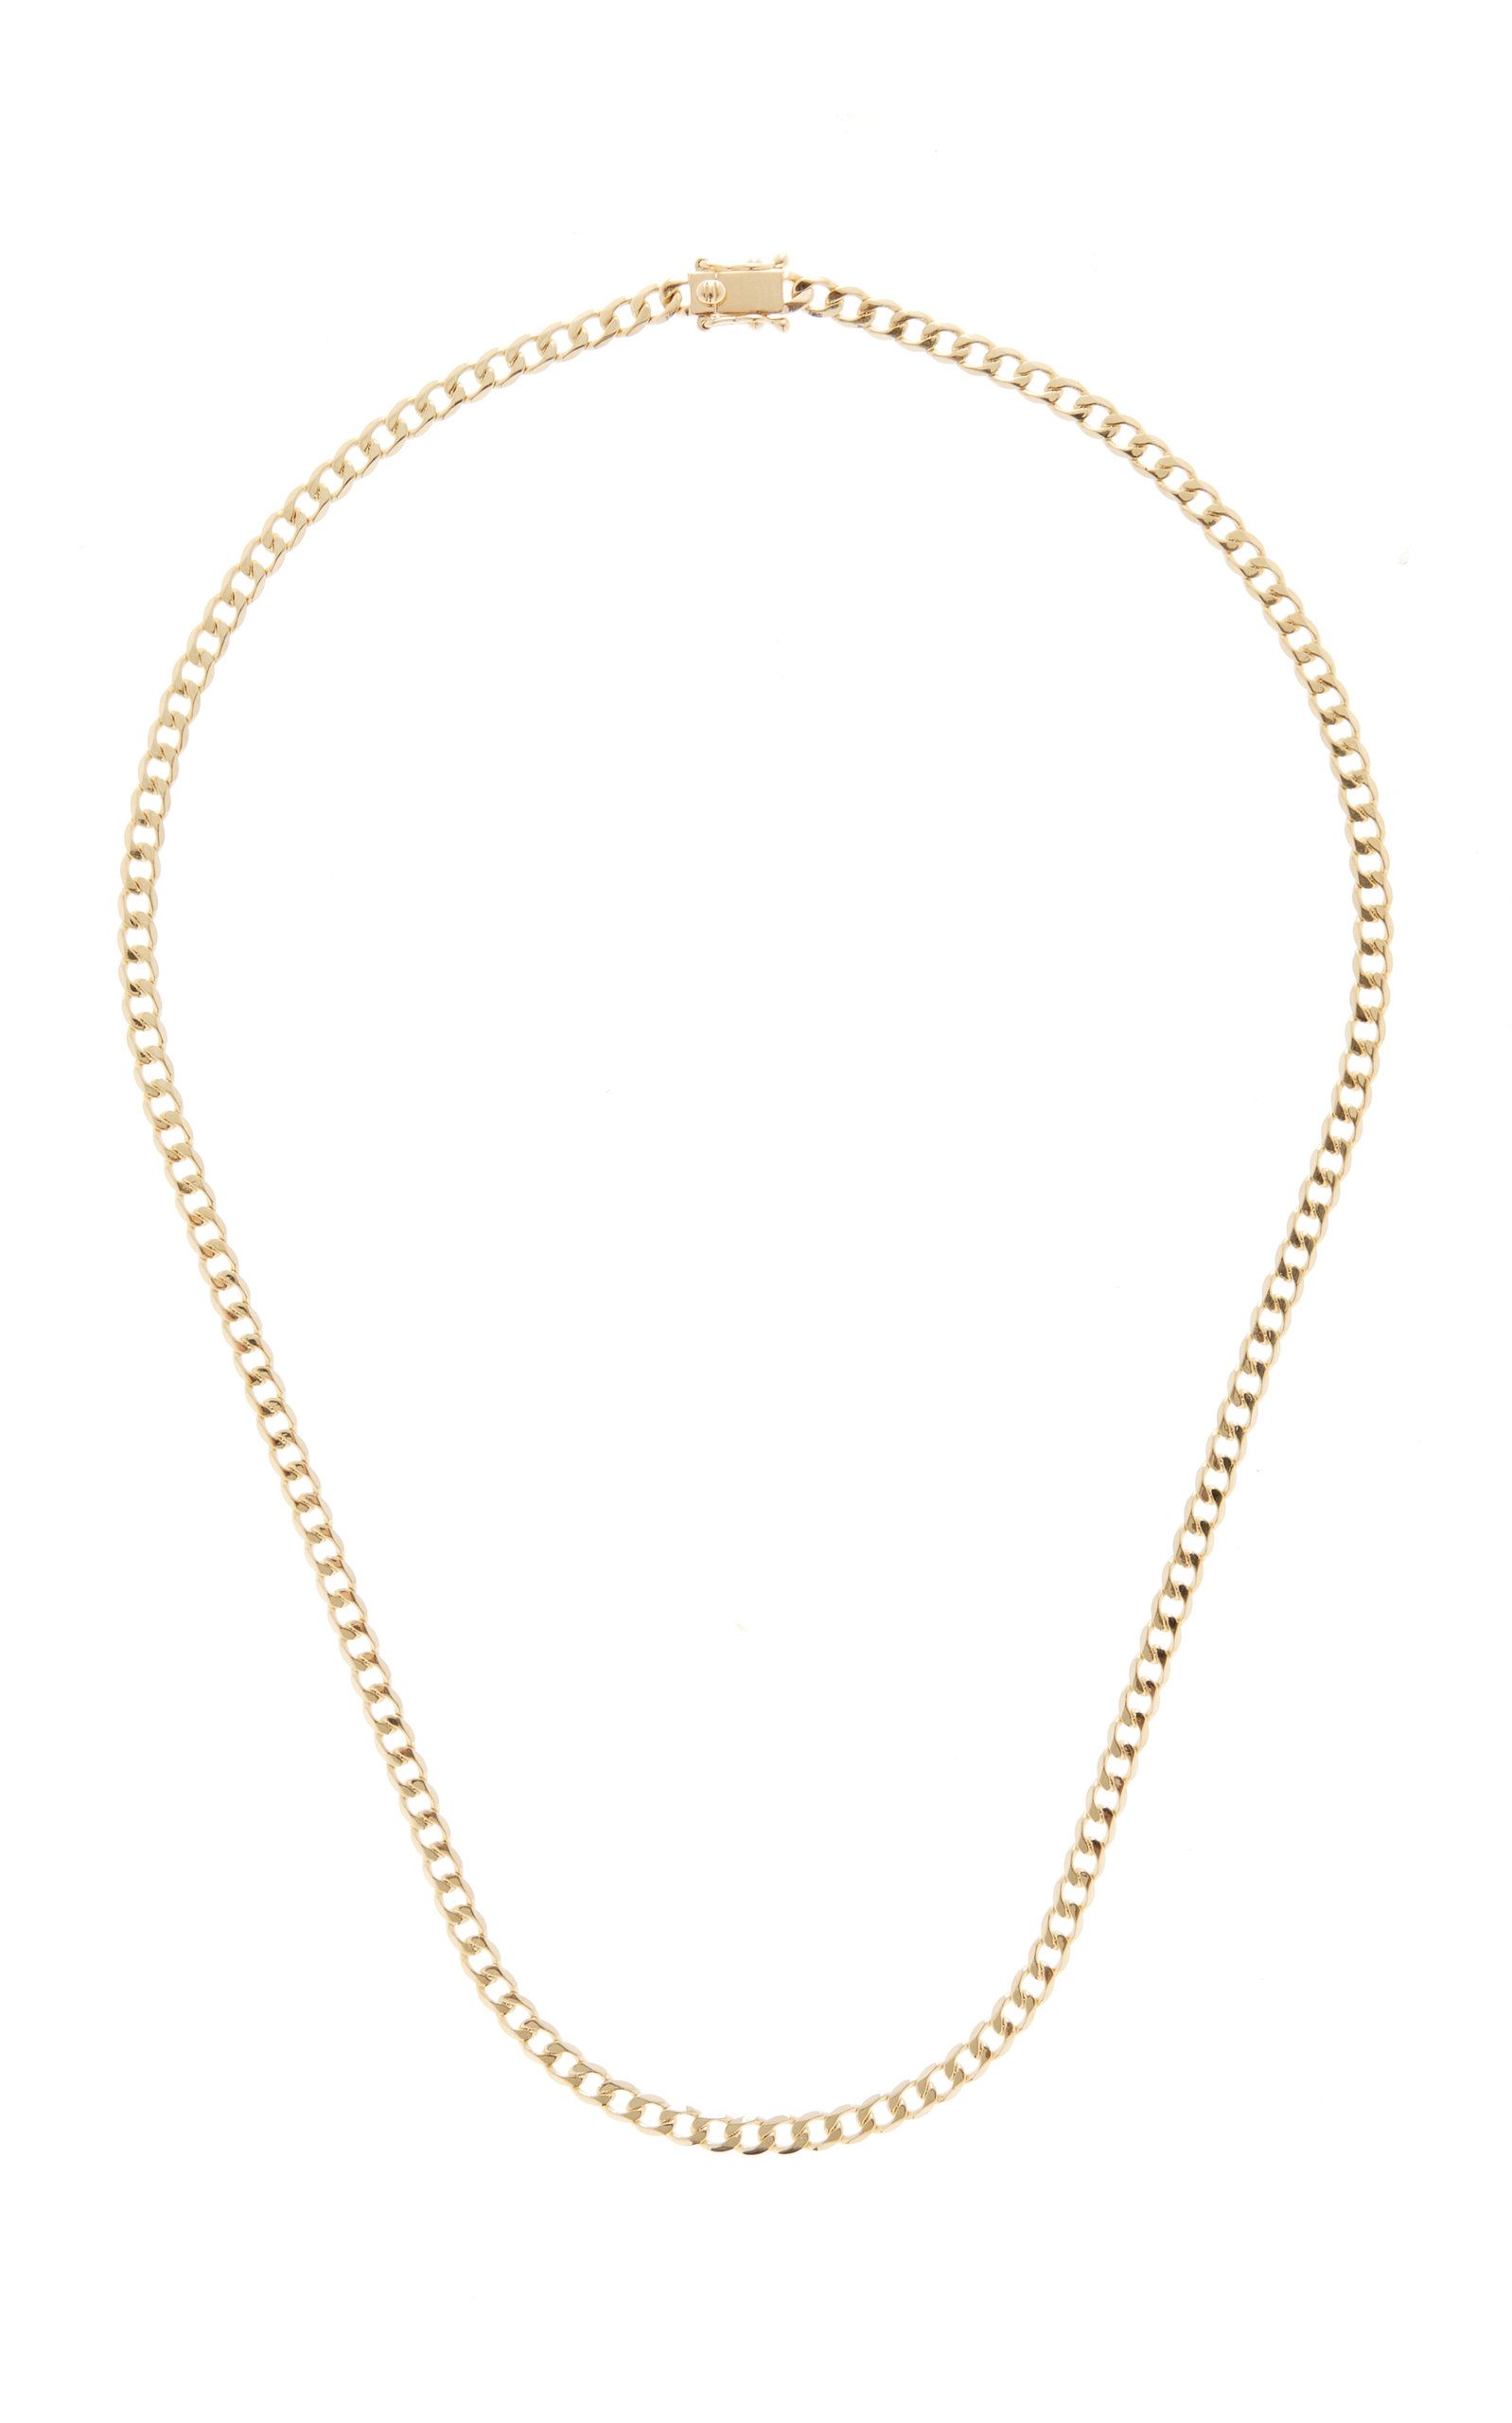 EF Collection - Women's 14K Yellow Gold Chain Necklace - Gold - Moda Operandi - Gifts For Her | Moda Operandi (Global)